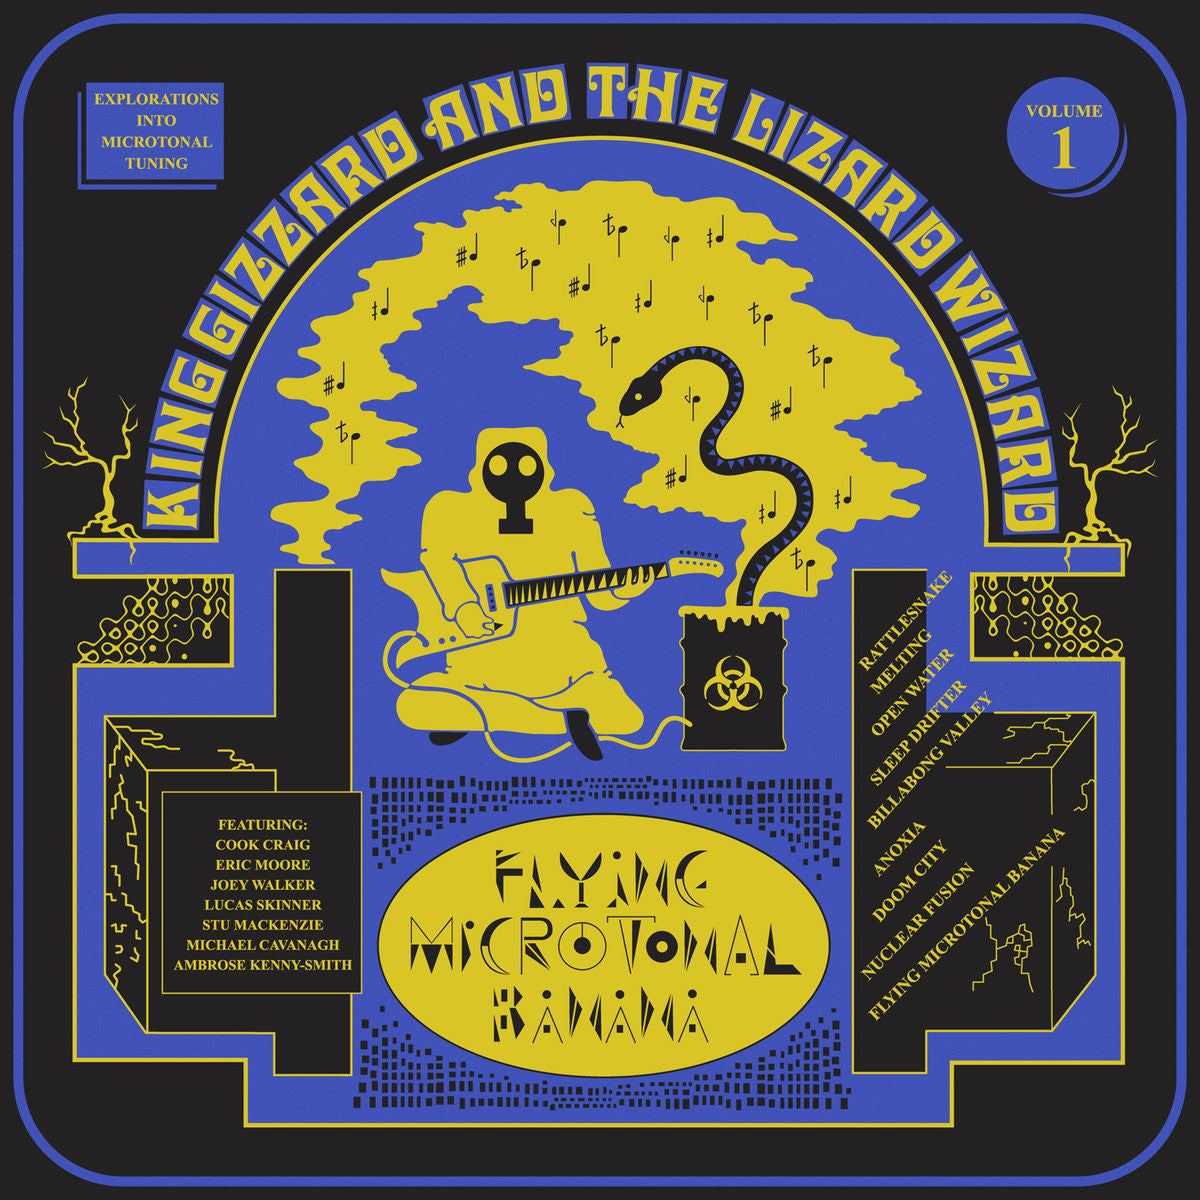 King Gizzard and the Lizard Wizard - Flying Microtonal Banana (Vinyl LP)